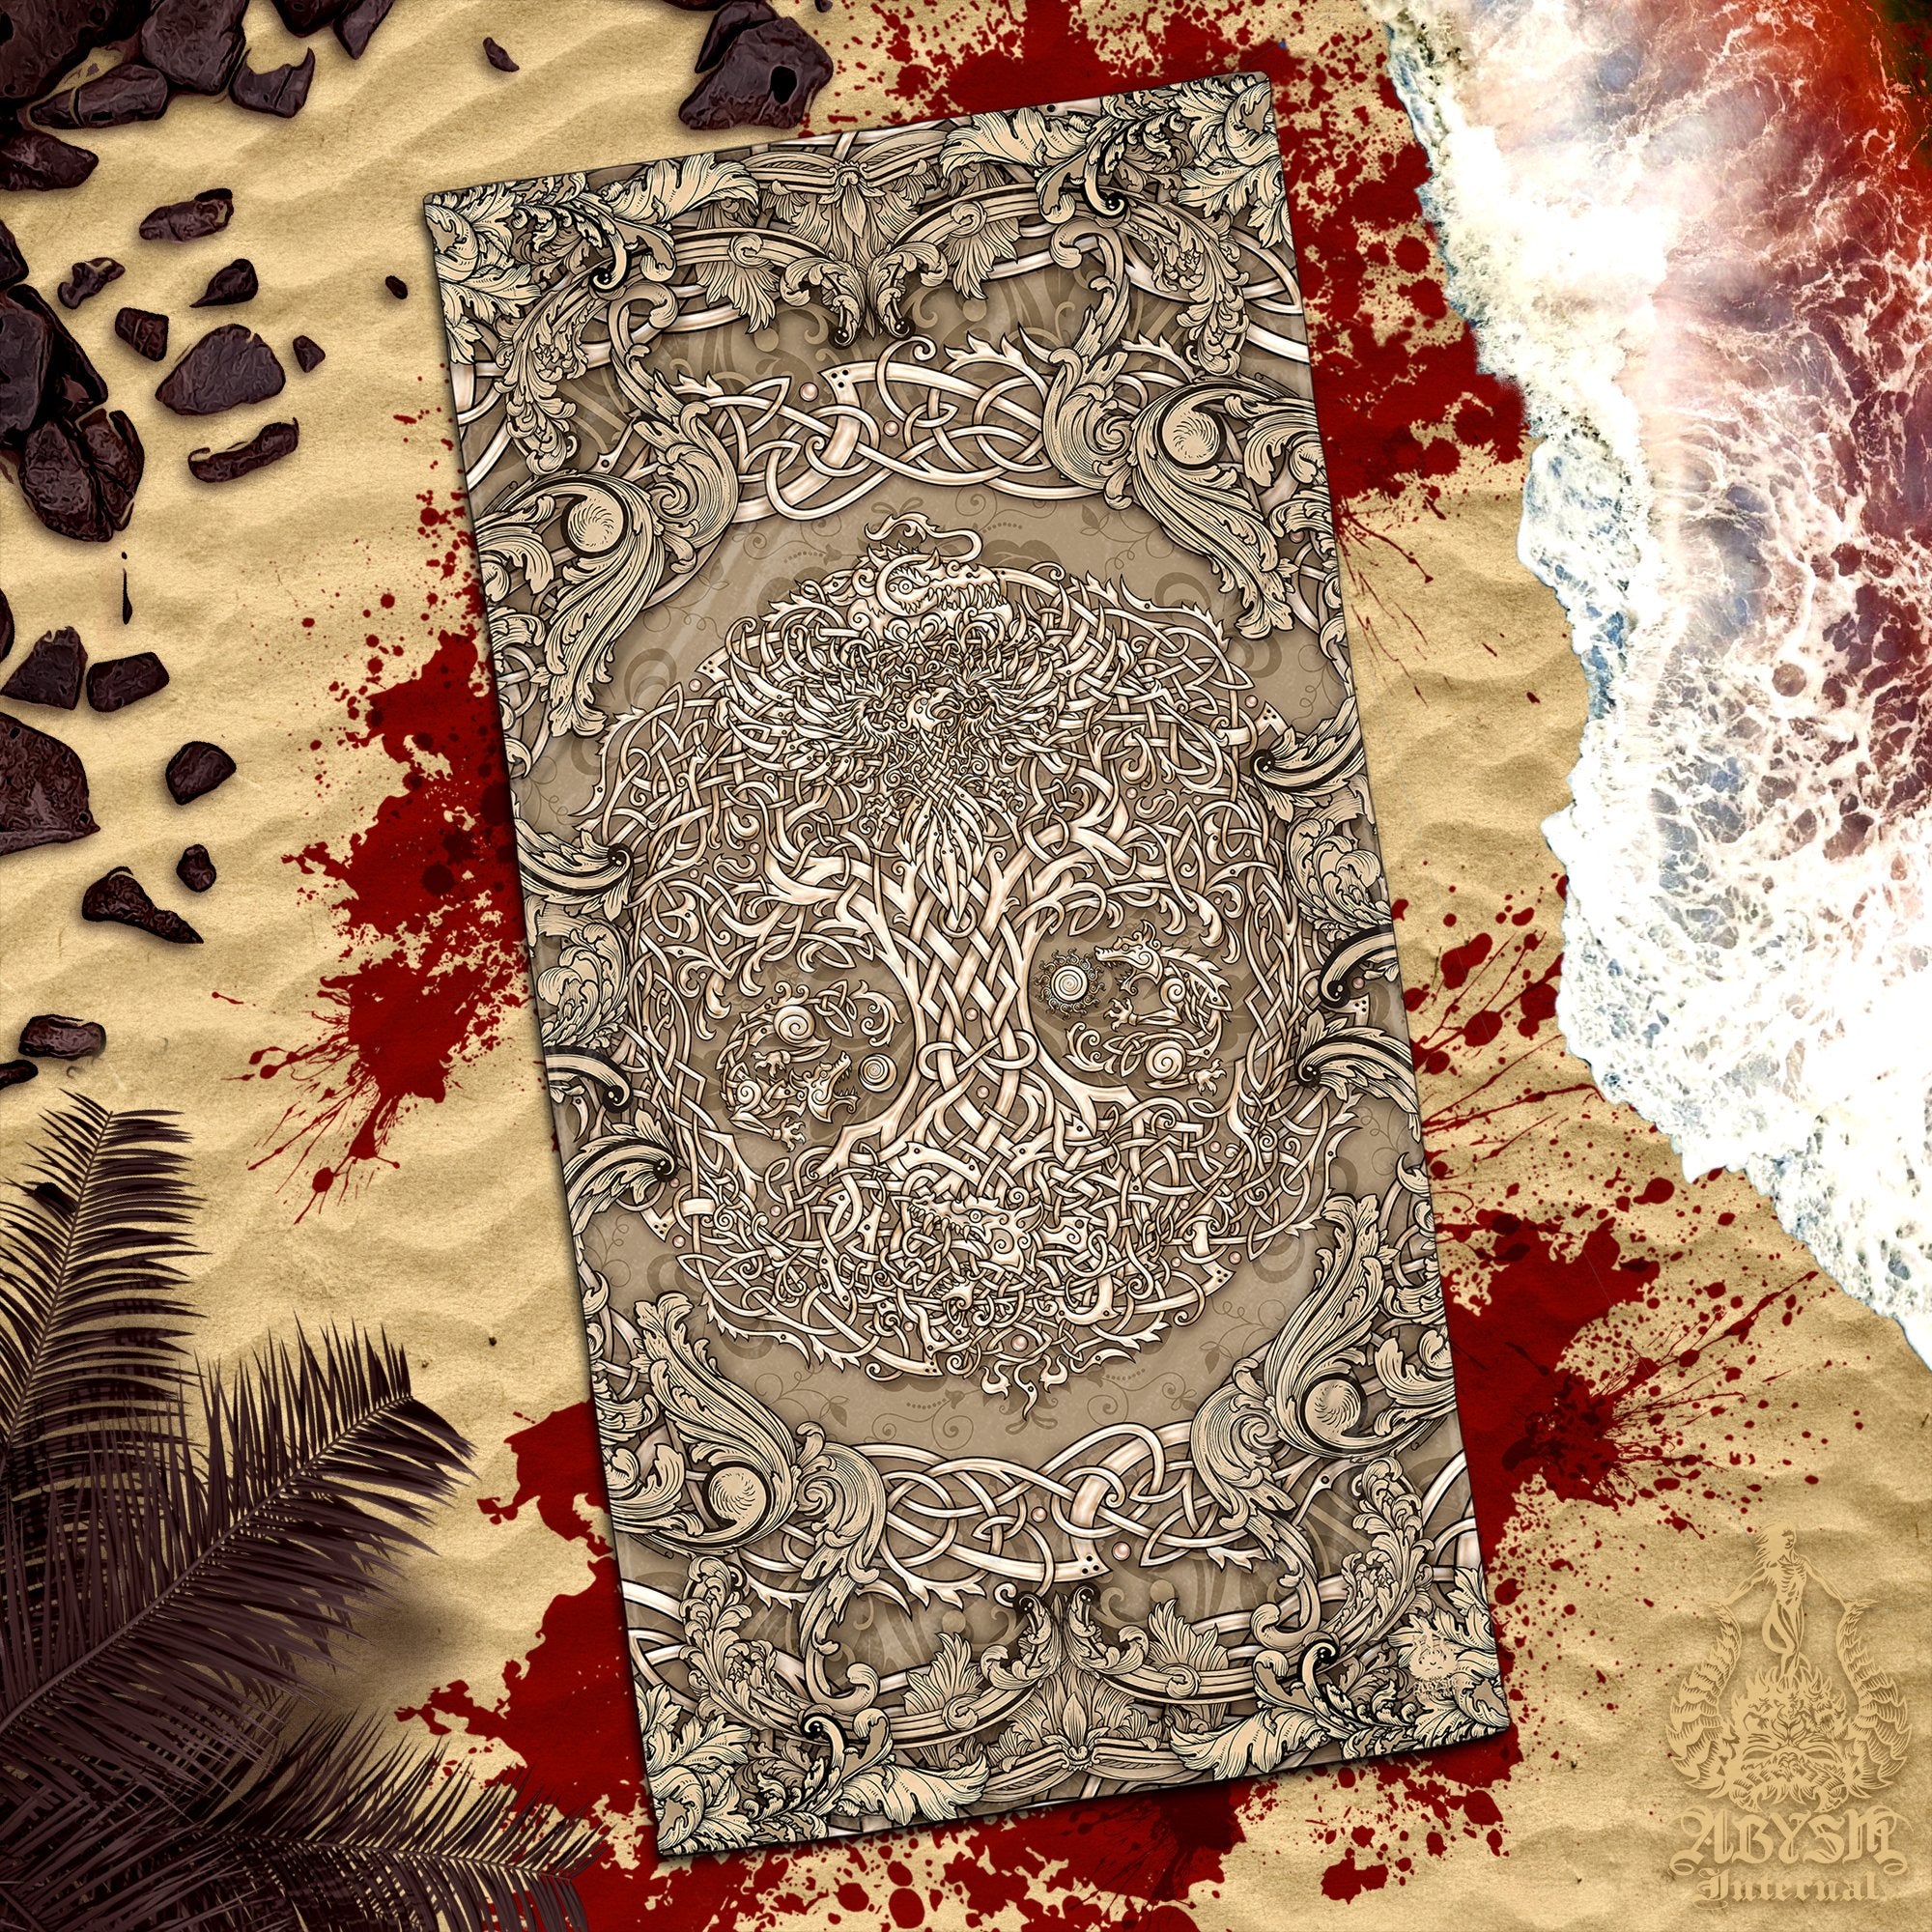 ALL Yggdrasil Beach Towel Designs, Viking Tree of Life, Norse Mythology Art - 13 Colors - Abysm Internal